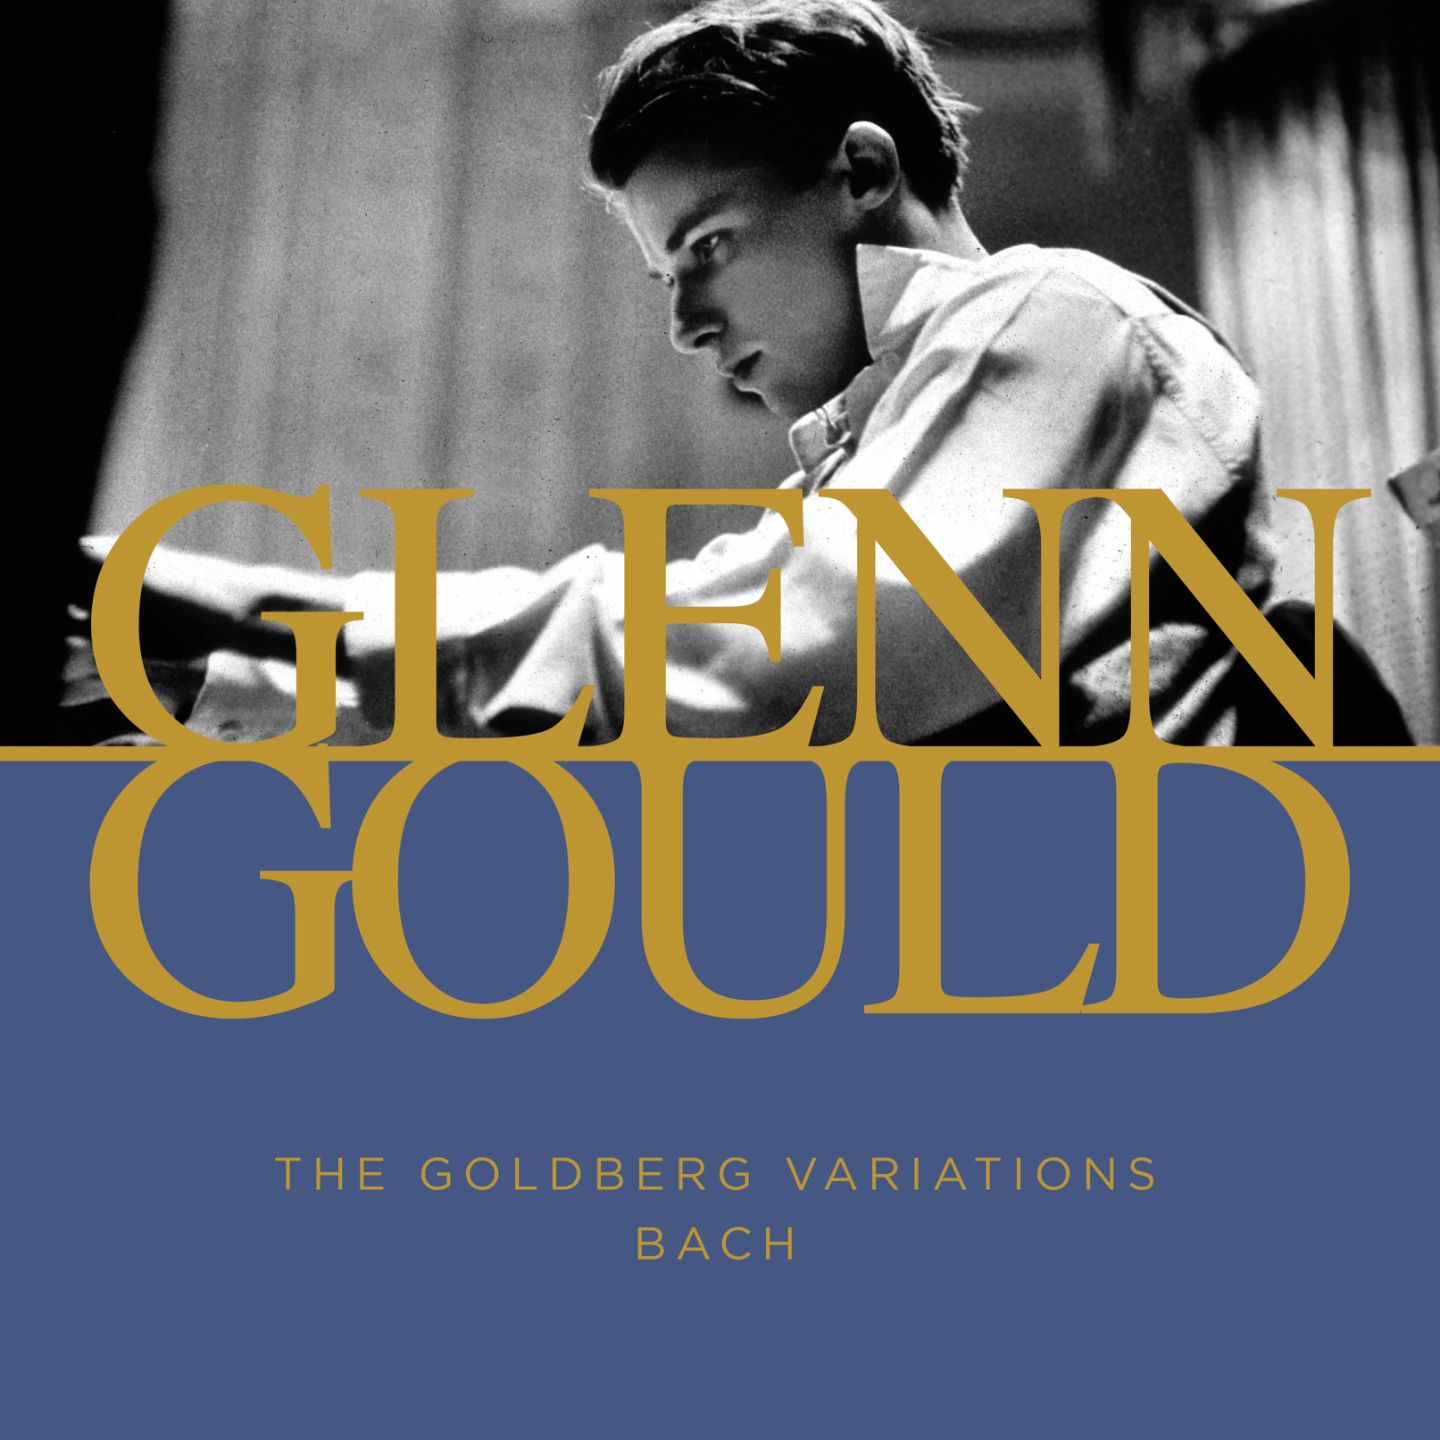 The Goldberg Variations: Bach